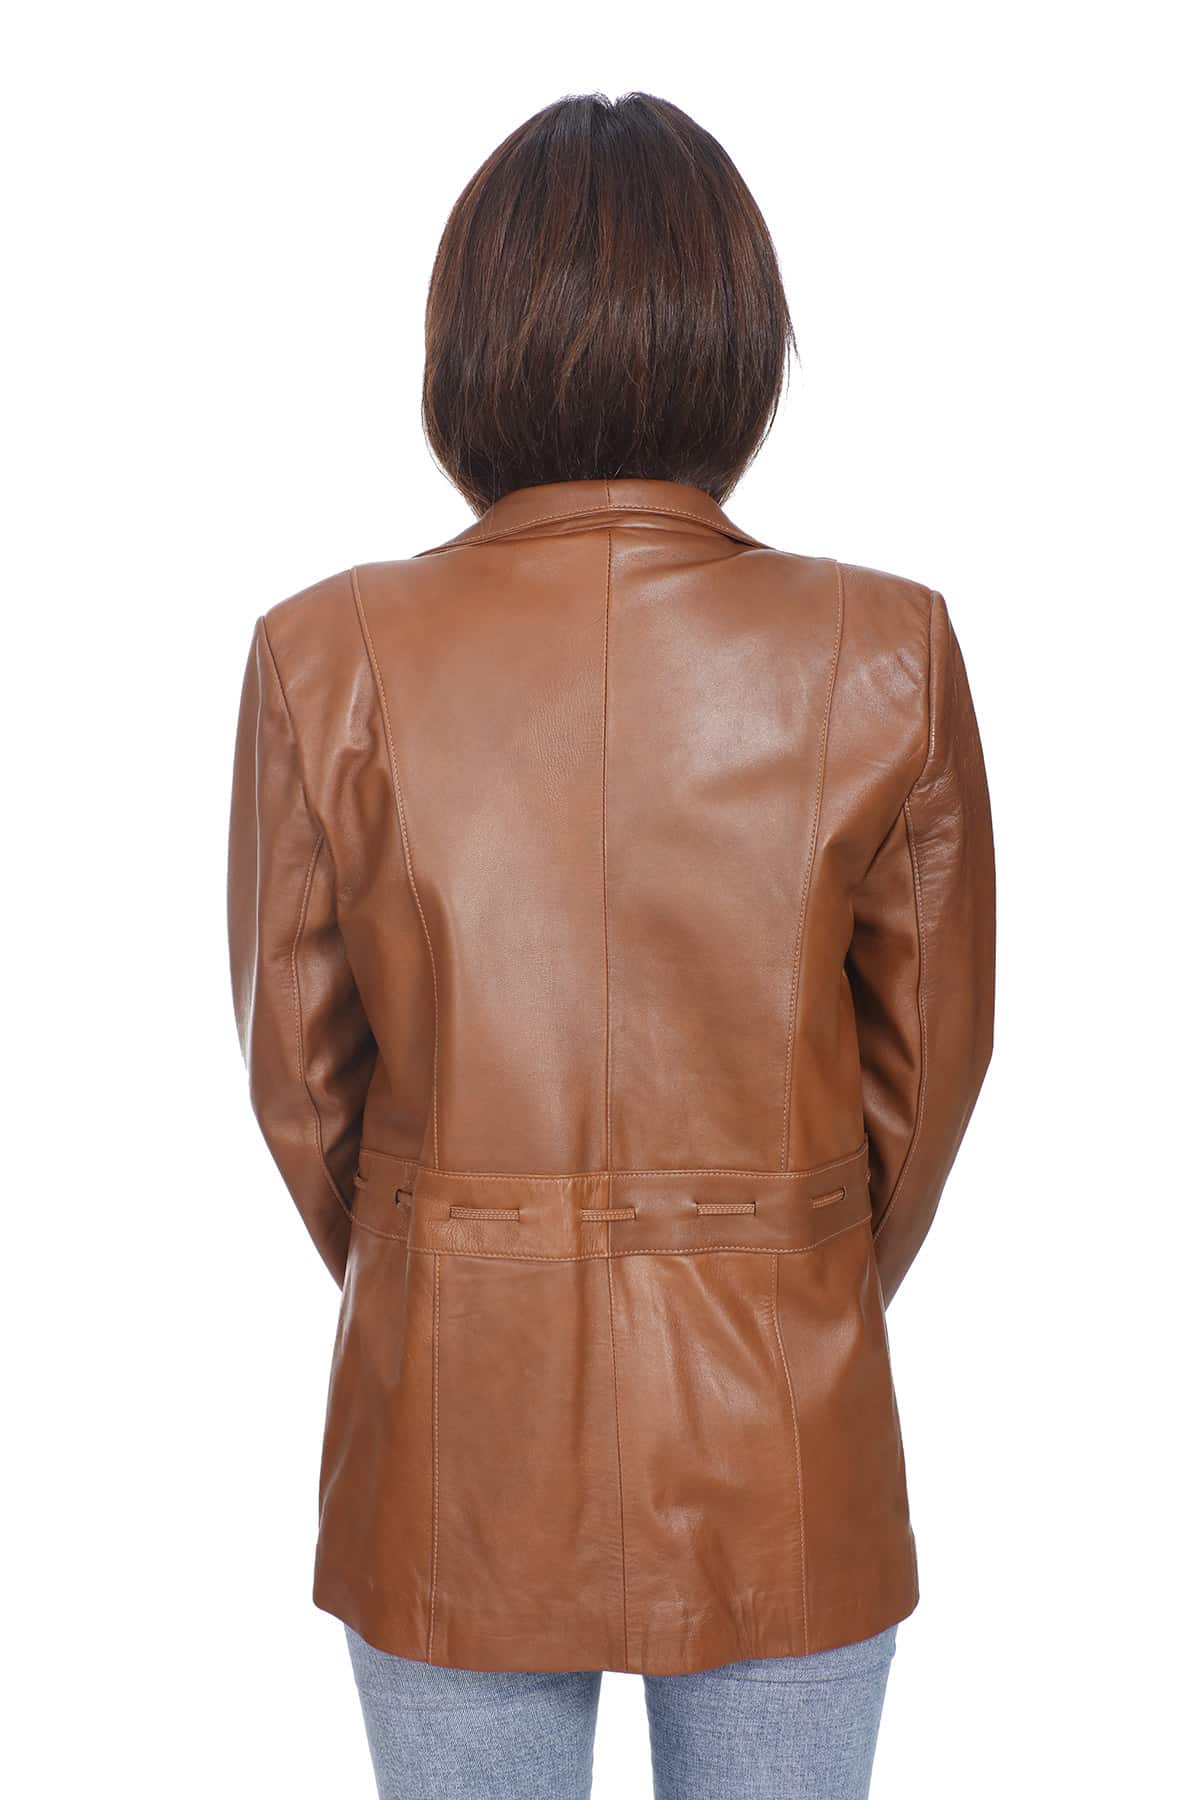 Custom Made Leather Jacket